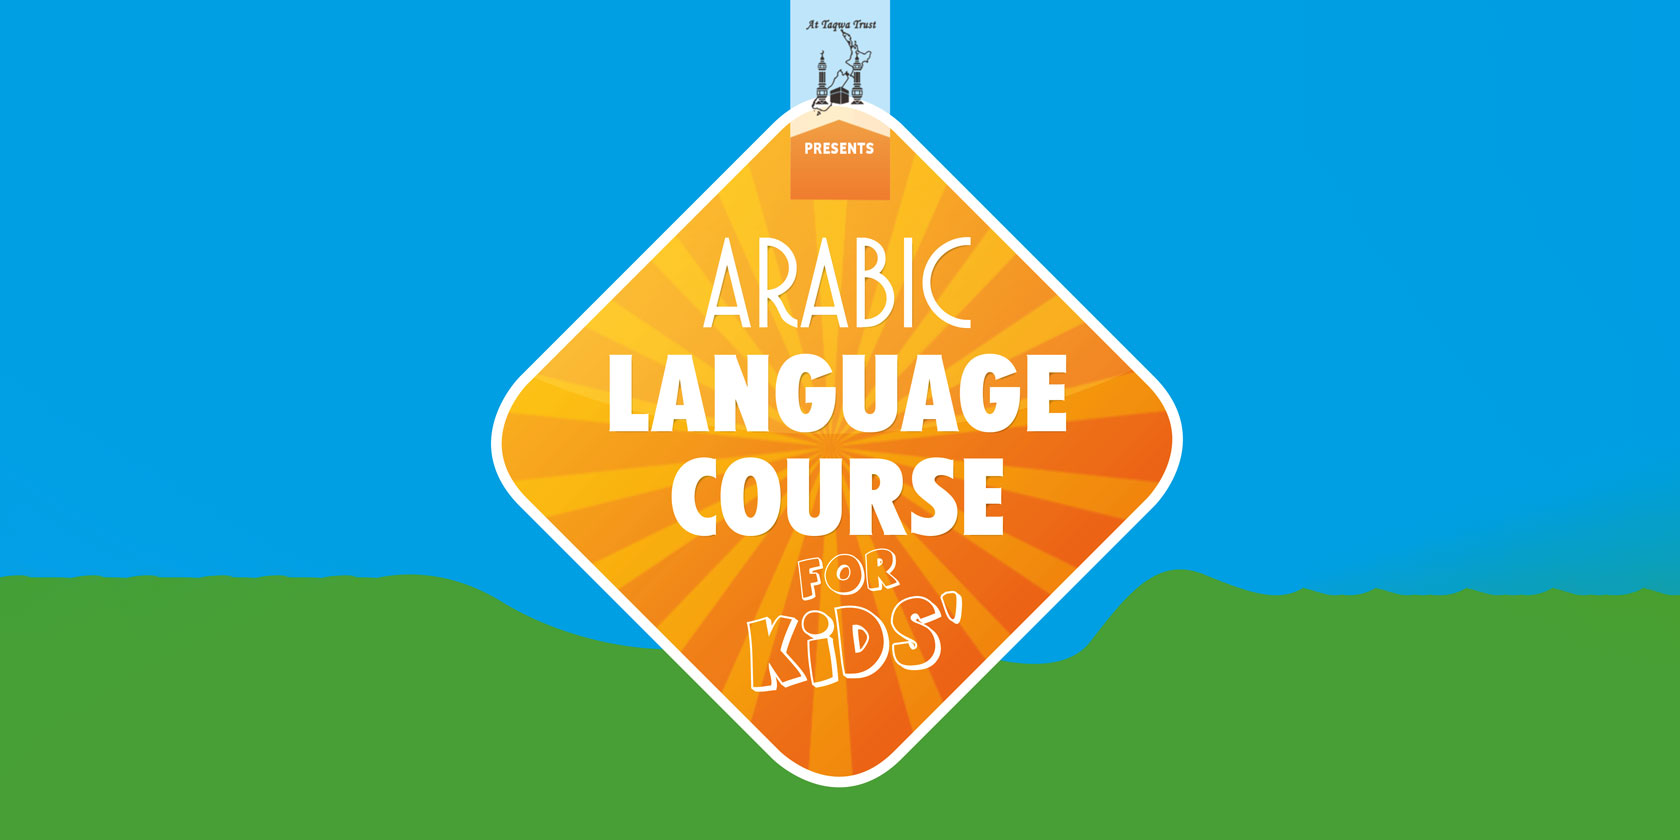 Arabic-Language-Course-Kids-2018_slider